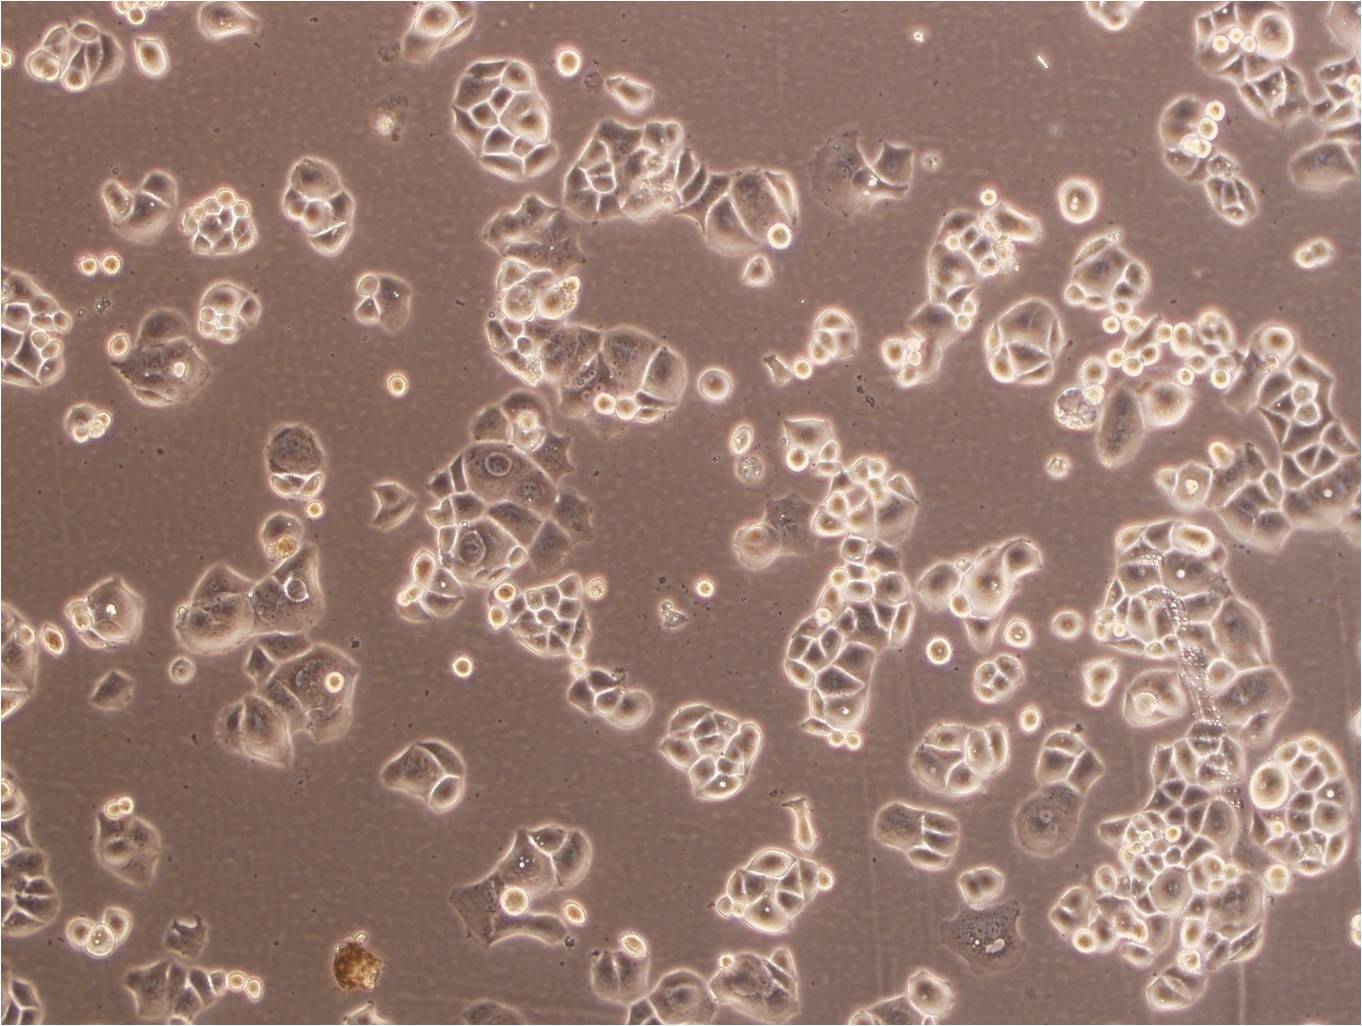 Calu-3 Cells|人肺腺癌克隆细胞(包送STR鉴定报告)